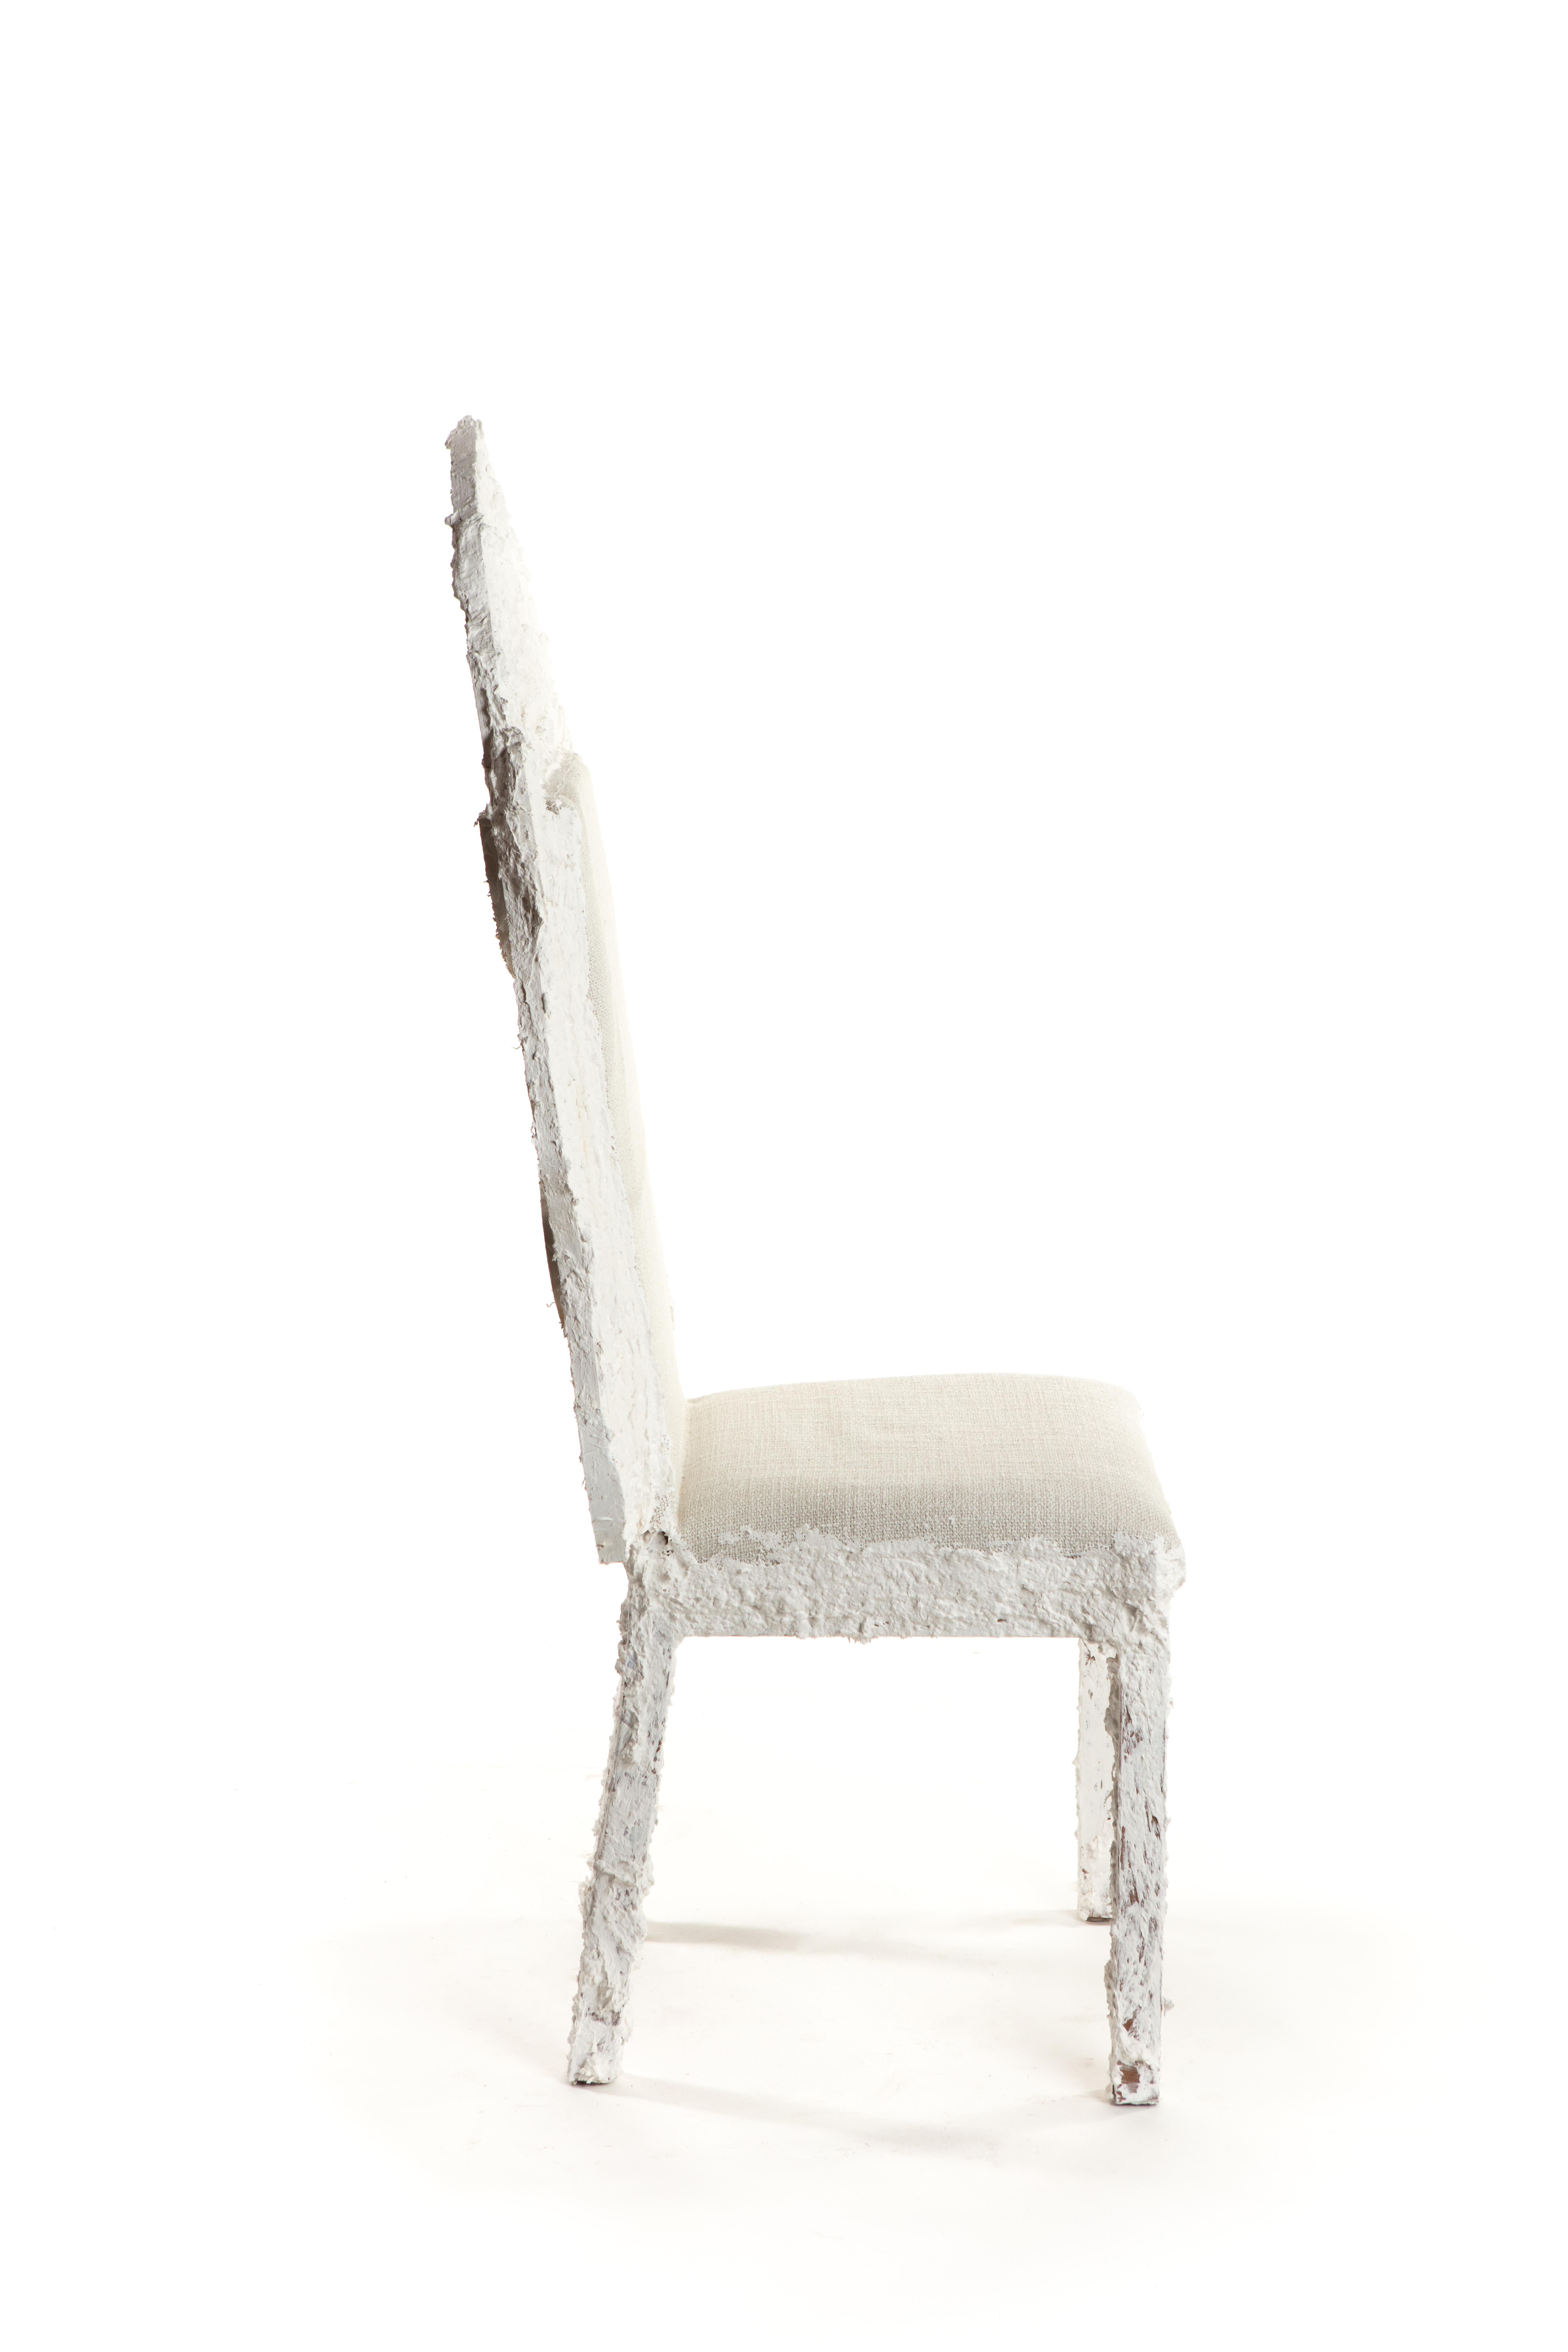 plaster chair